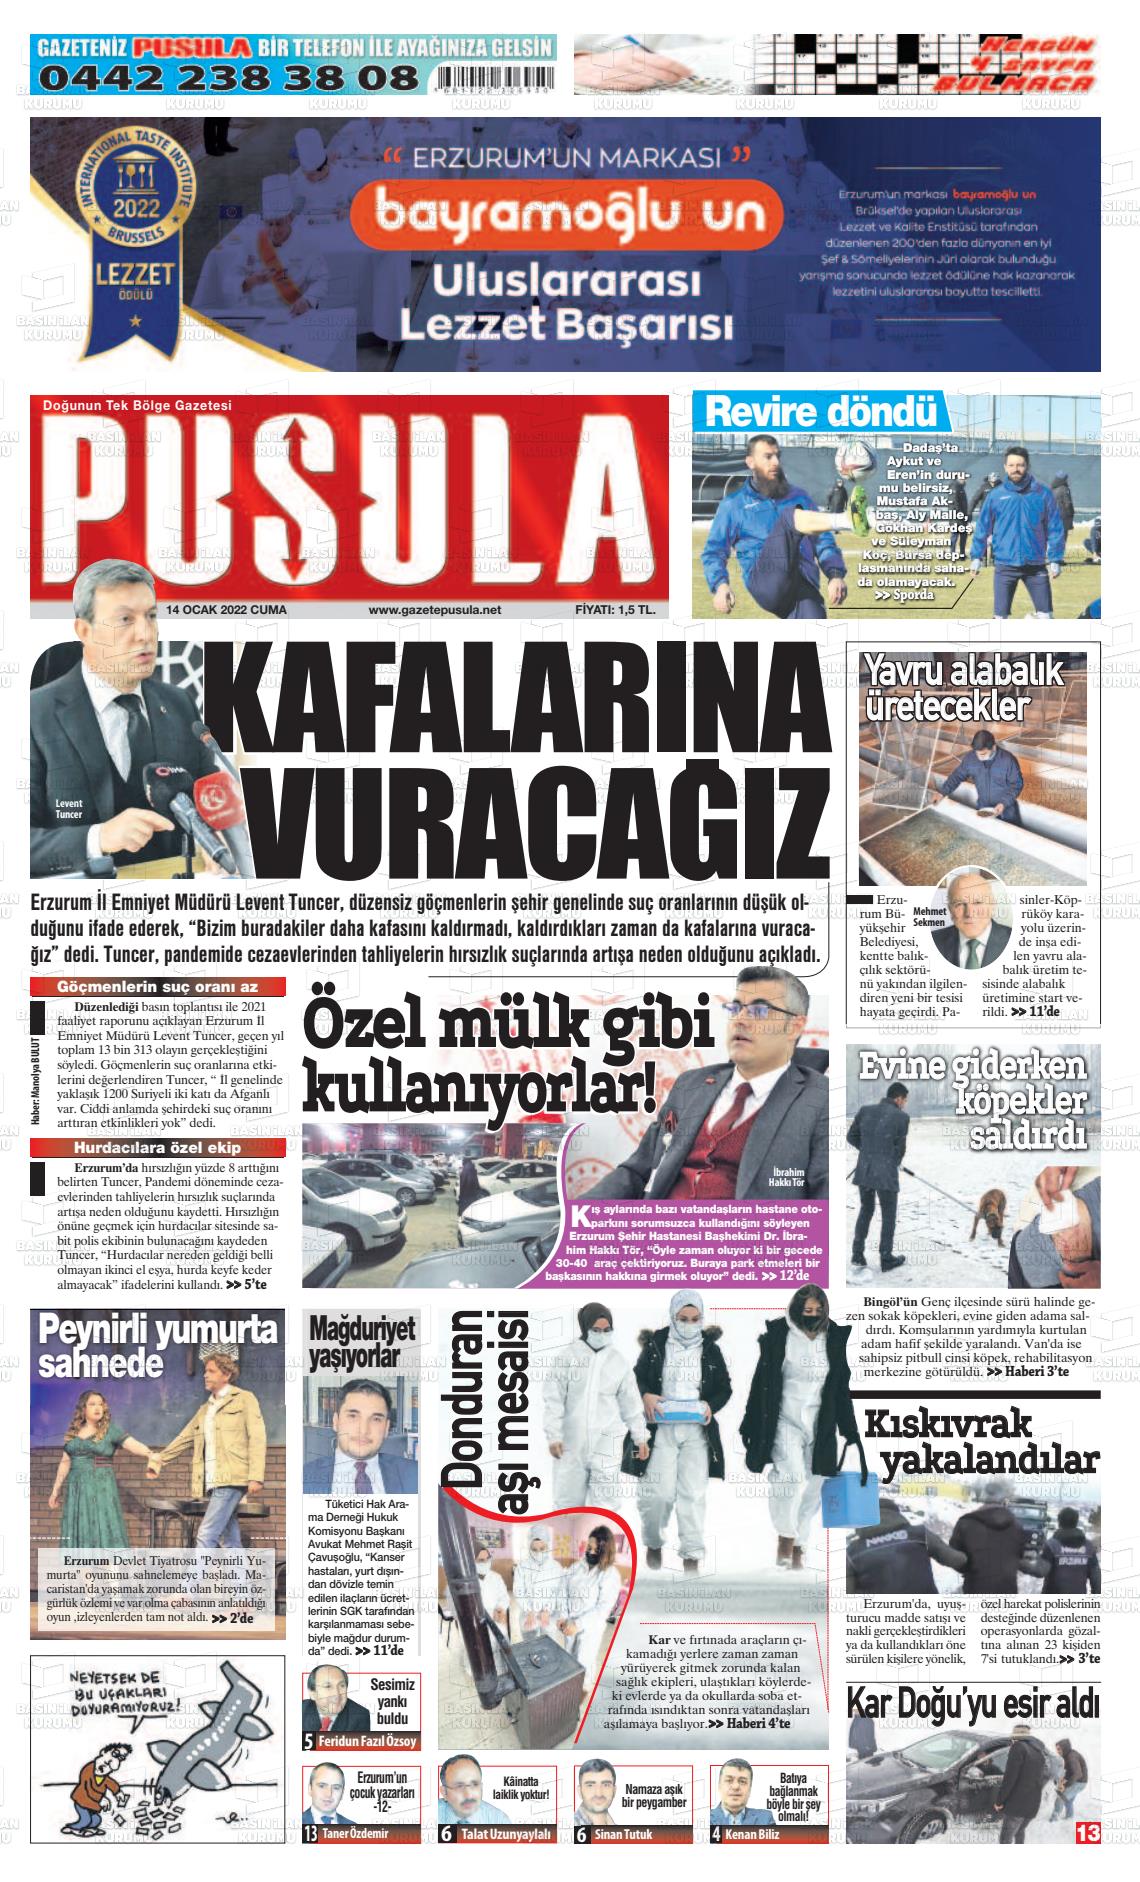 14 Ocak 2022 Erzurum Pusula Gazete Manşeti